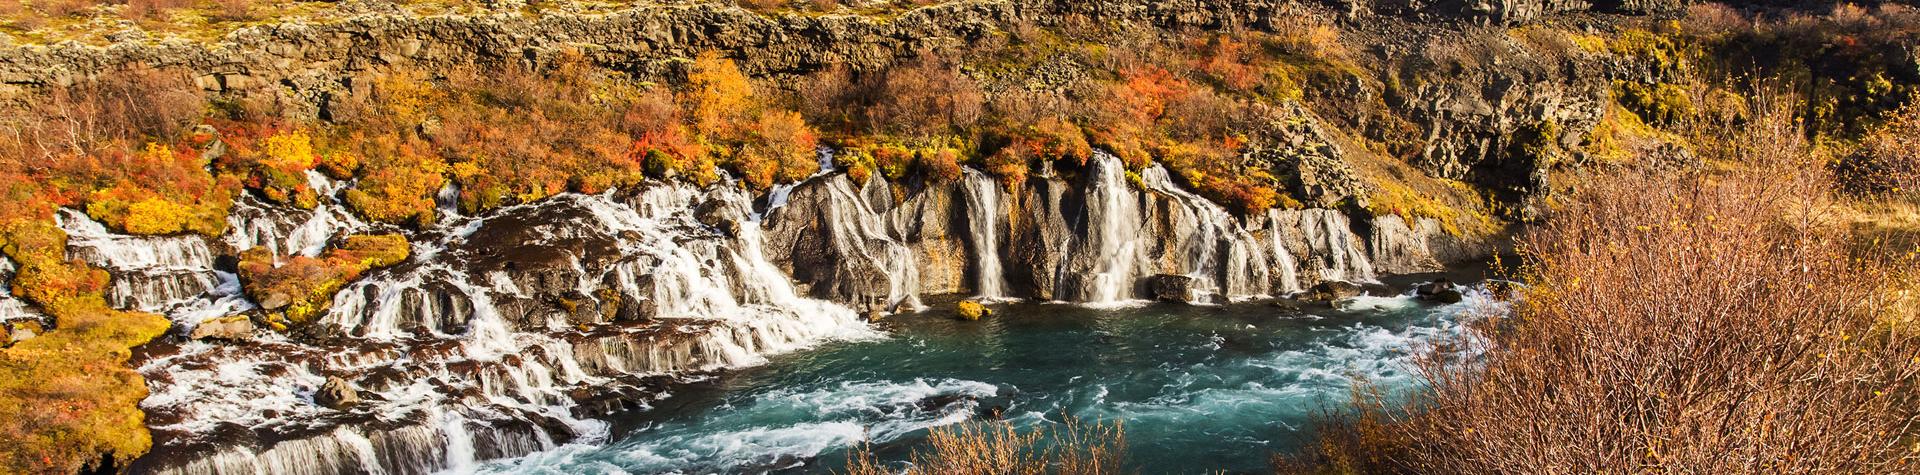 Waterfall Hraunfoss in autumn Iceland.